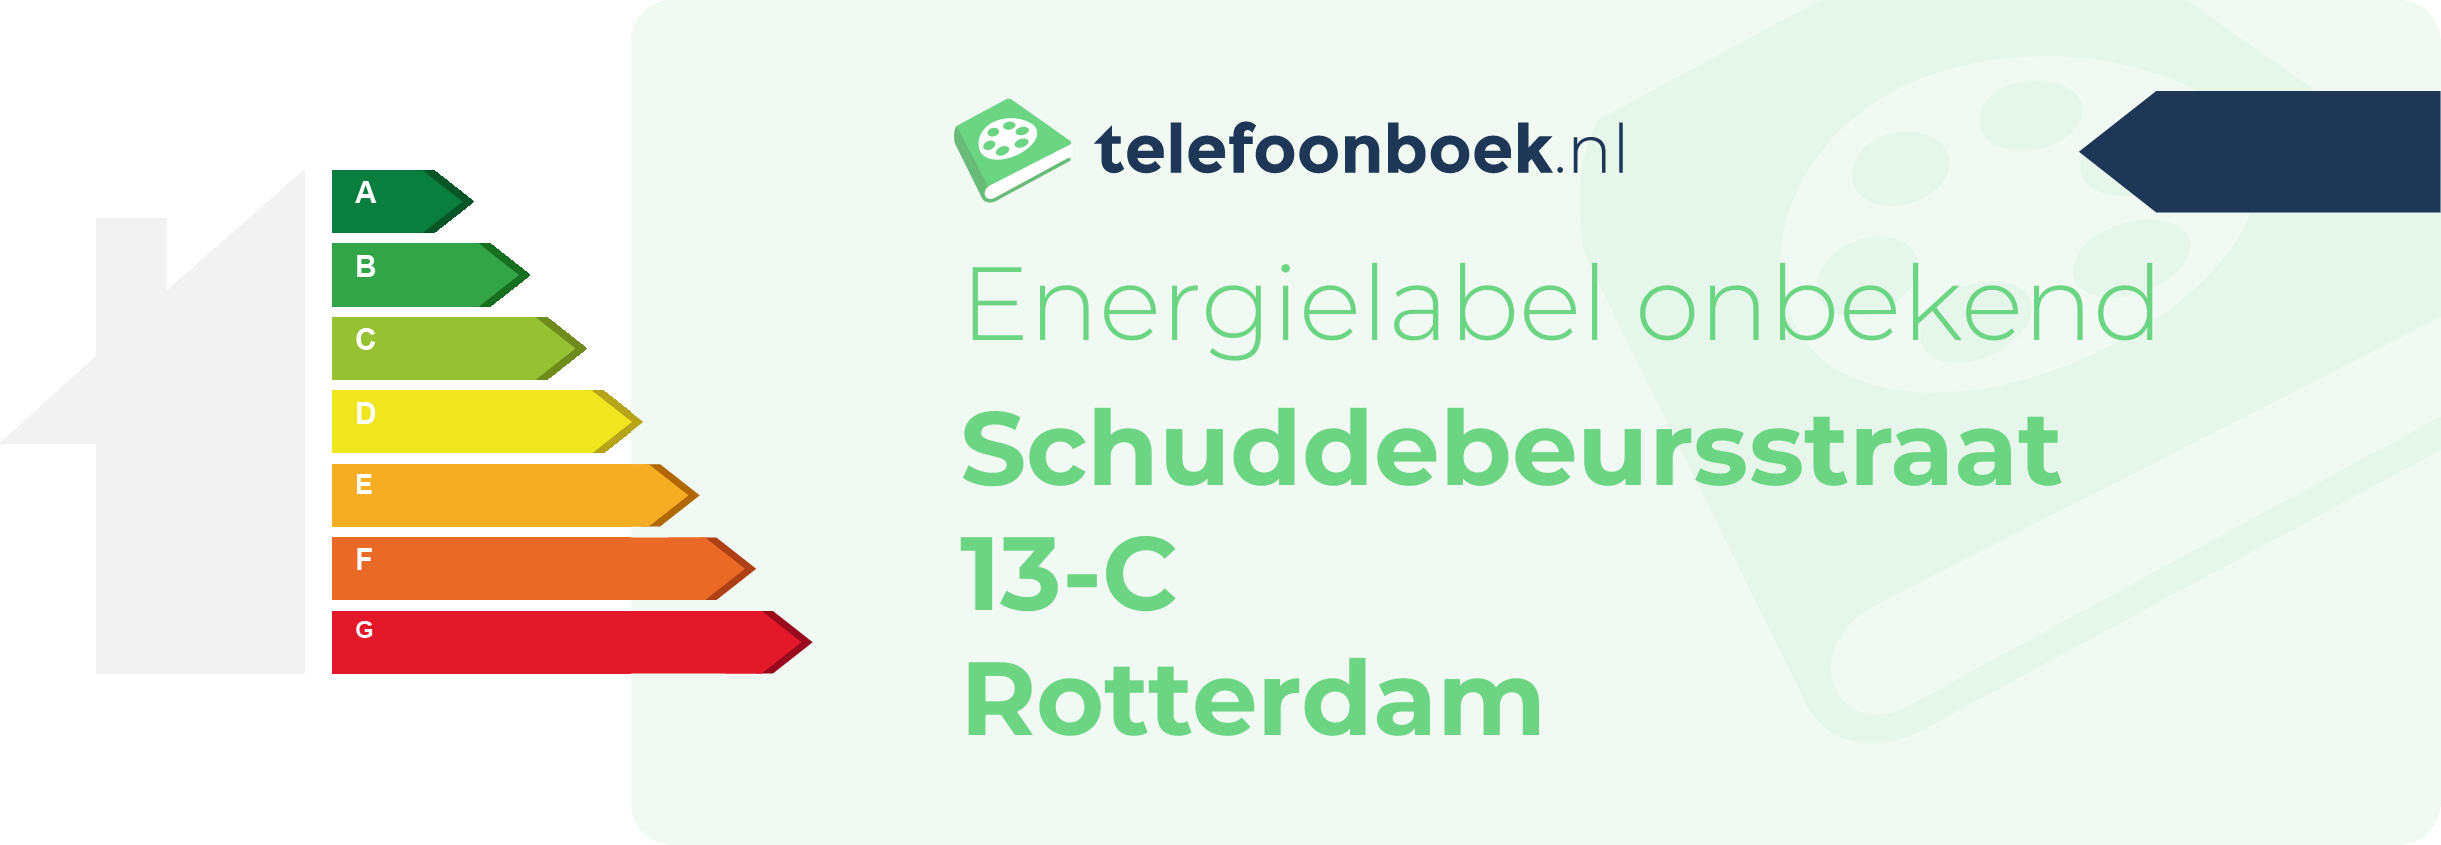 Energielabel Schuddebeursstraat 13-C Rotterdam